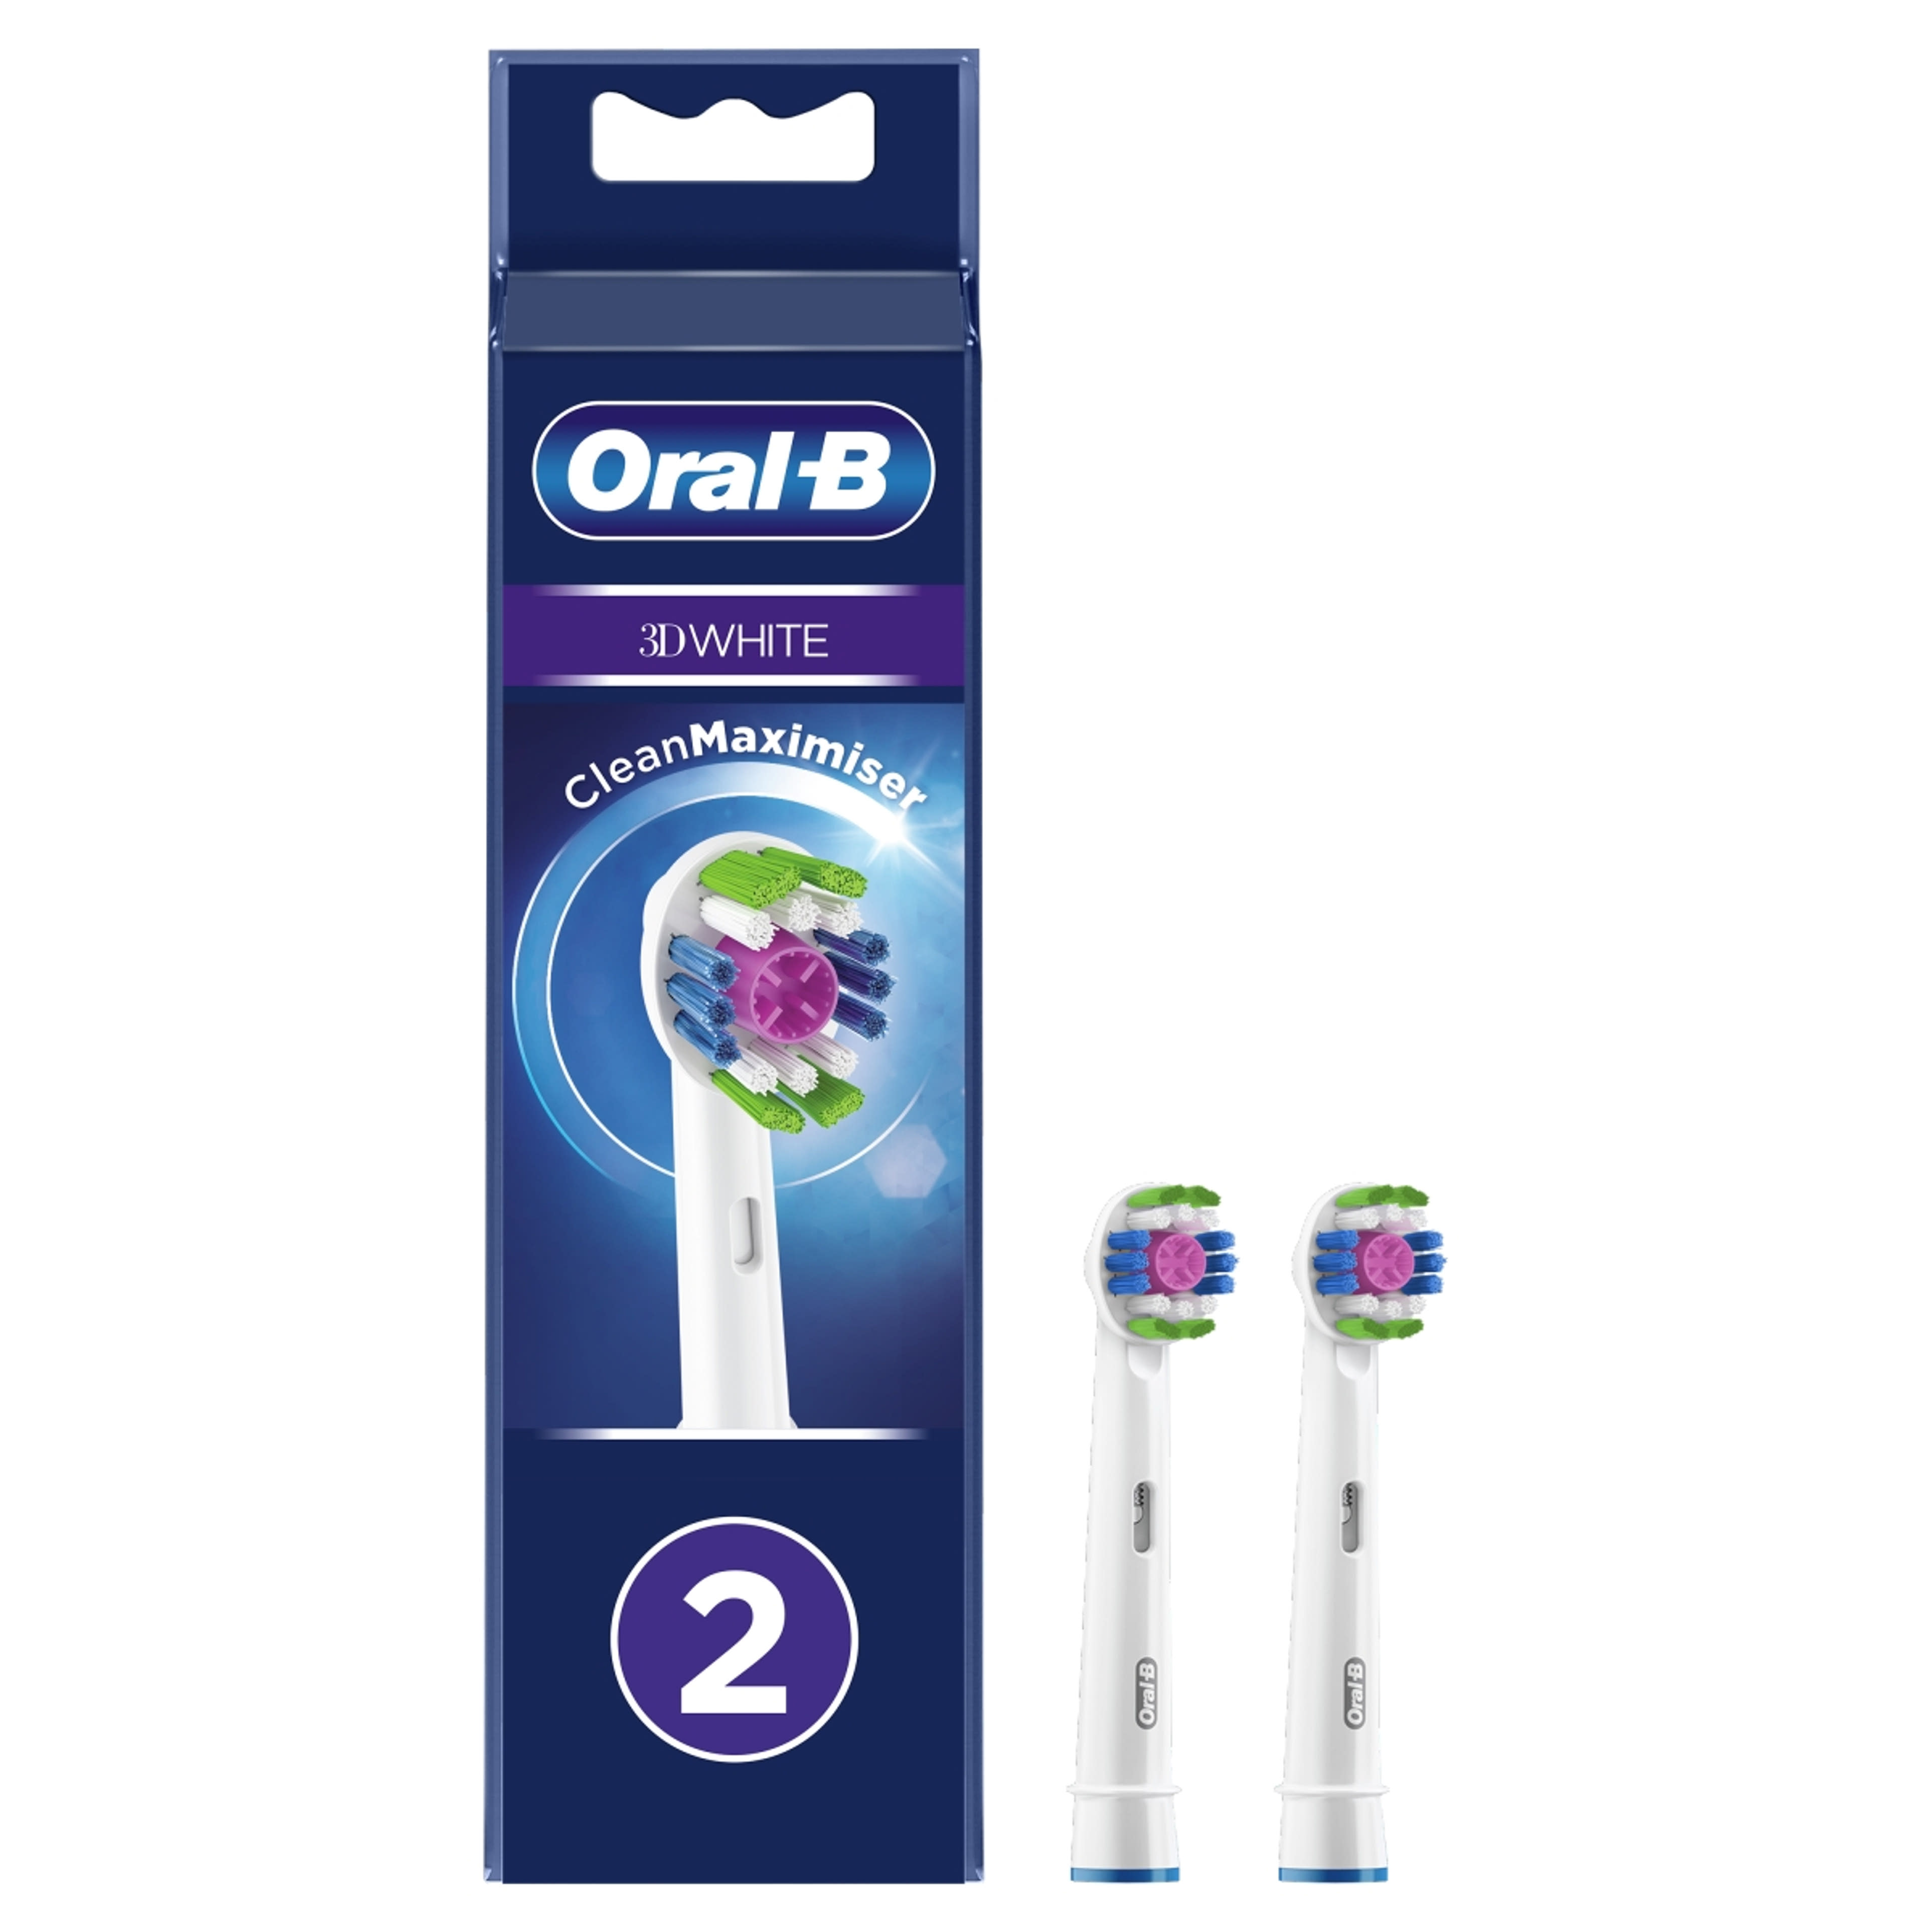 Oral-B 3D White elektromos fogkefe fótfej - 2 db-8